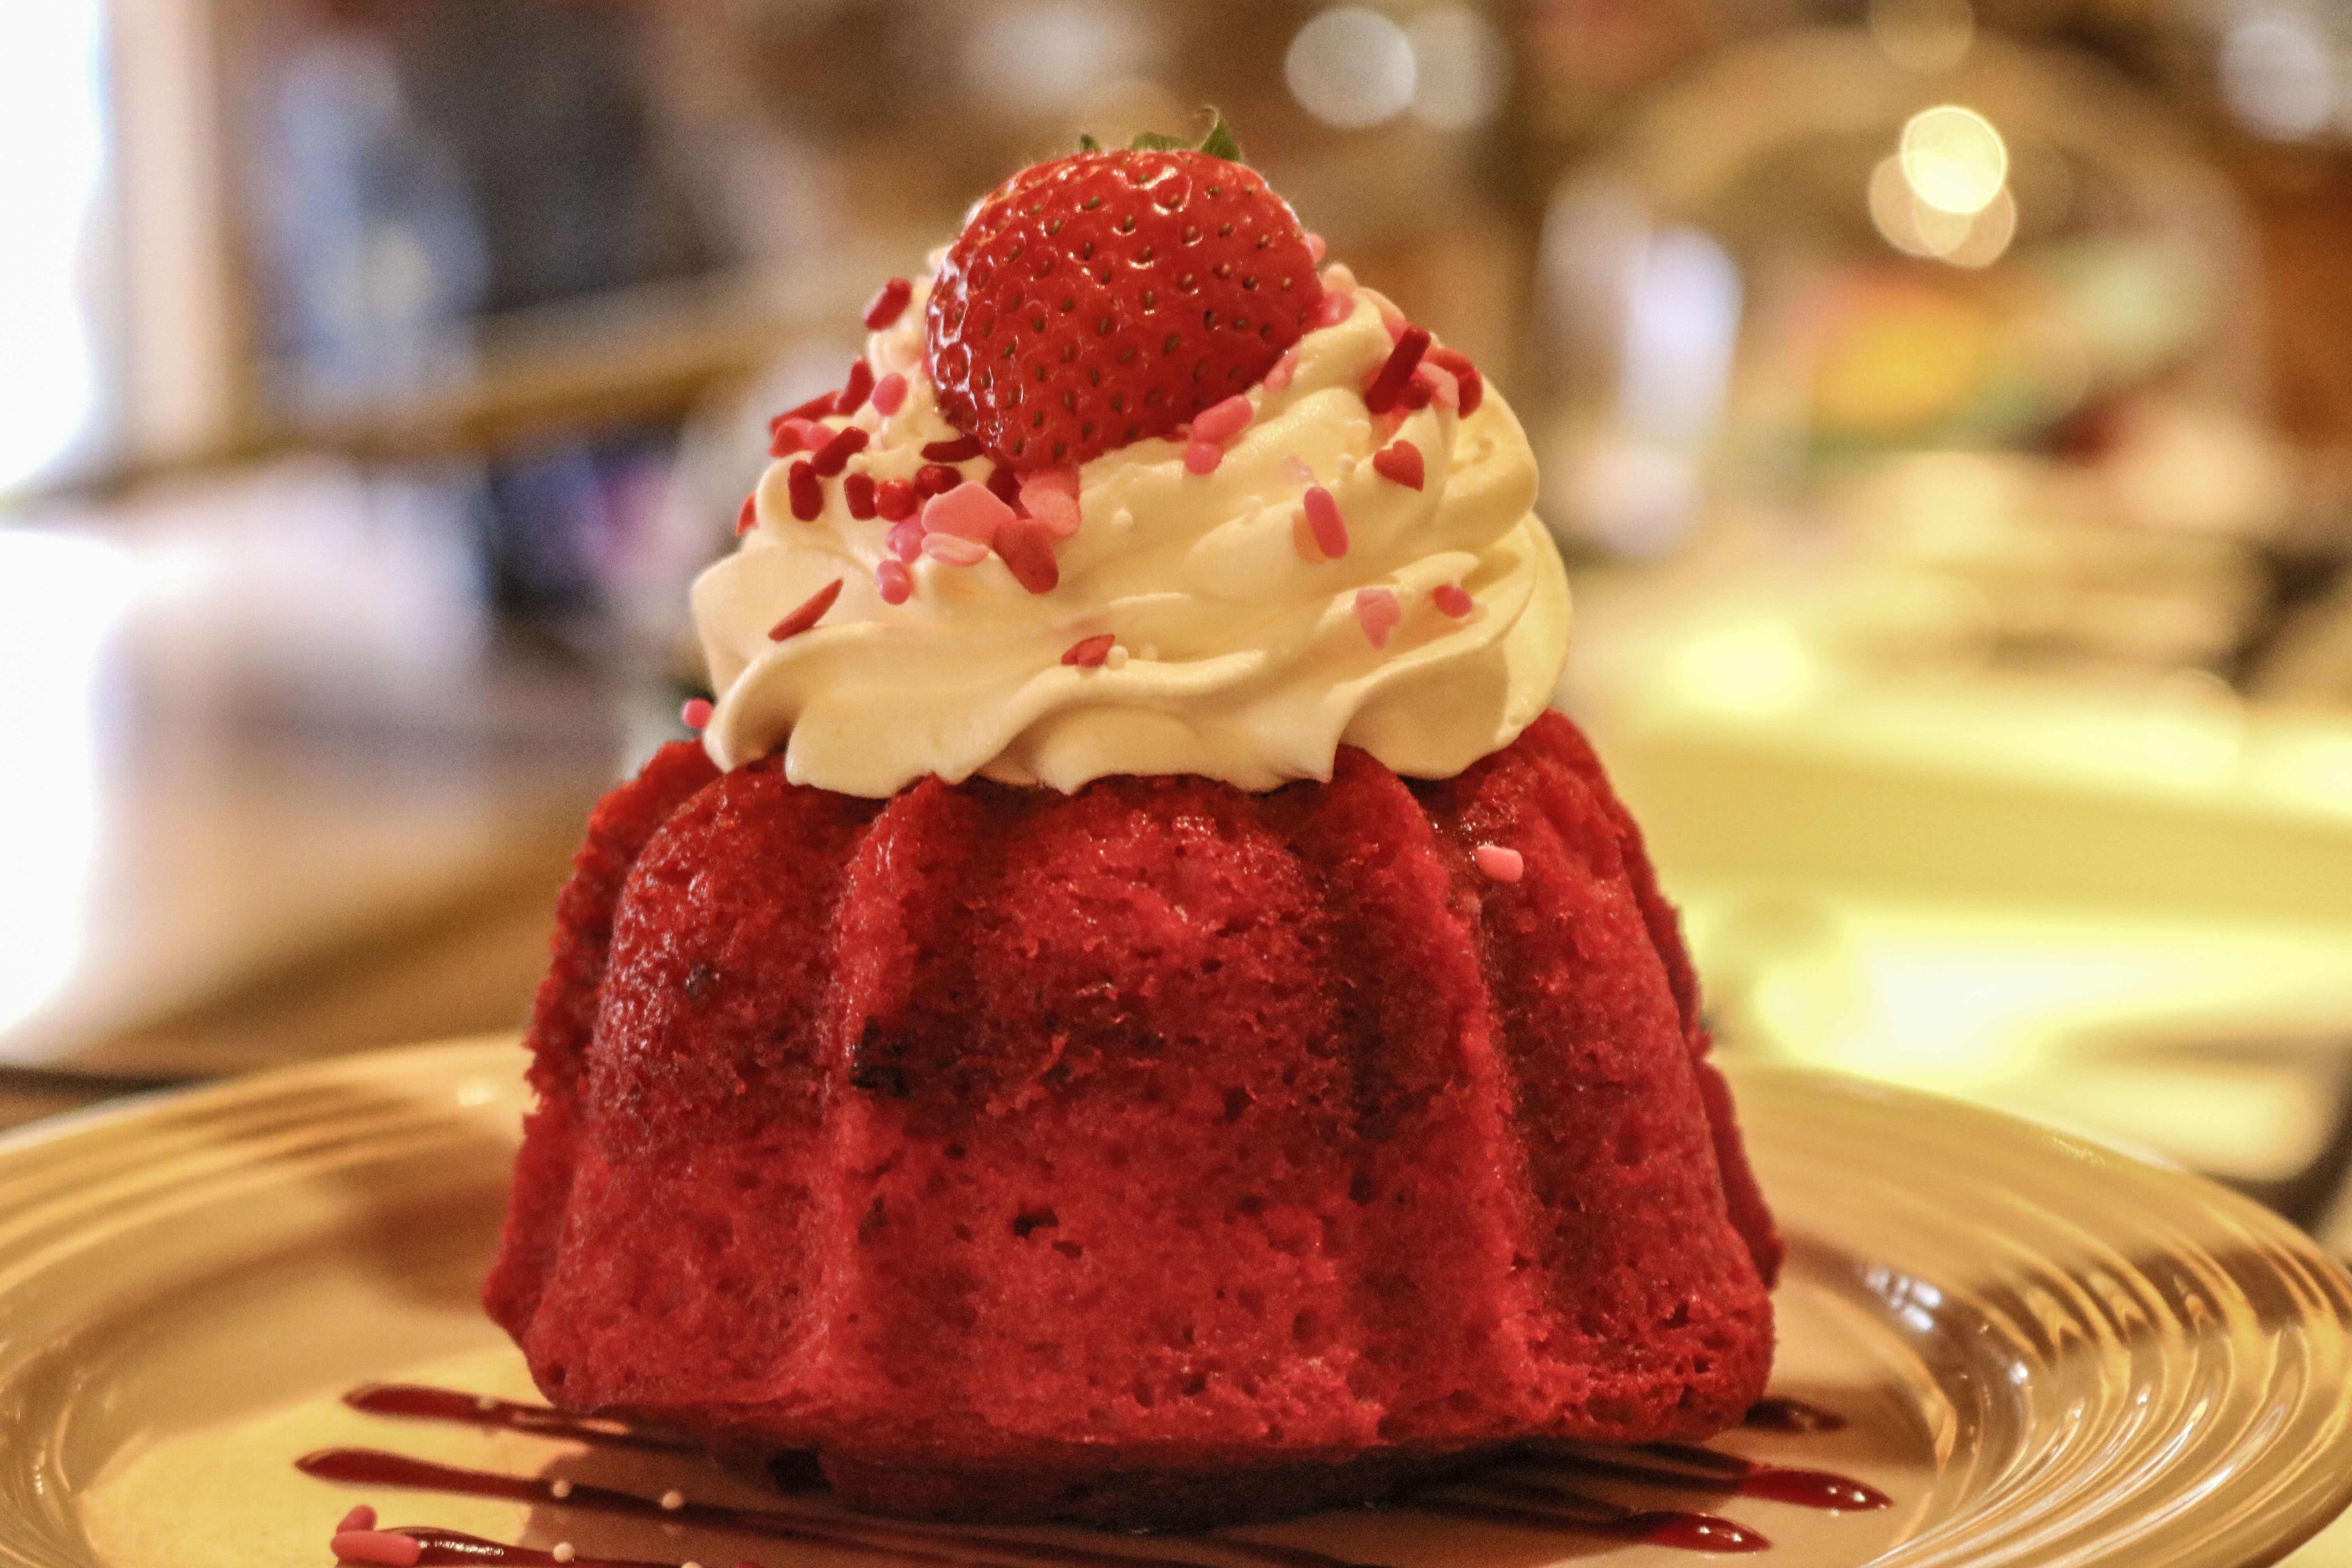 Plaza Inn's limited Strawberry Bundt Cake!